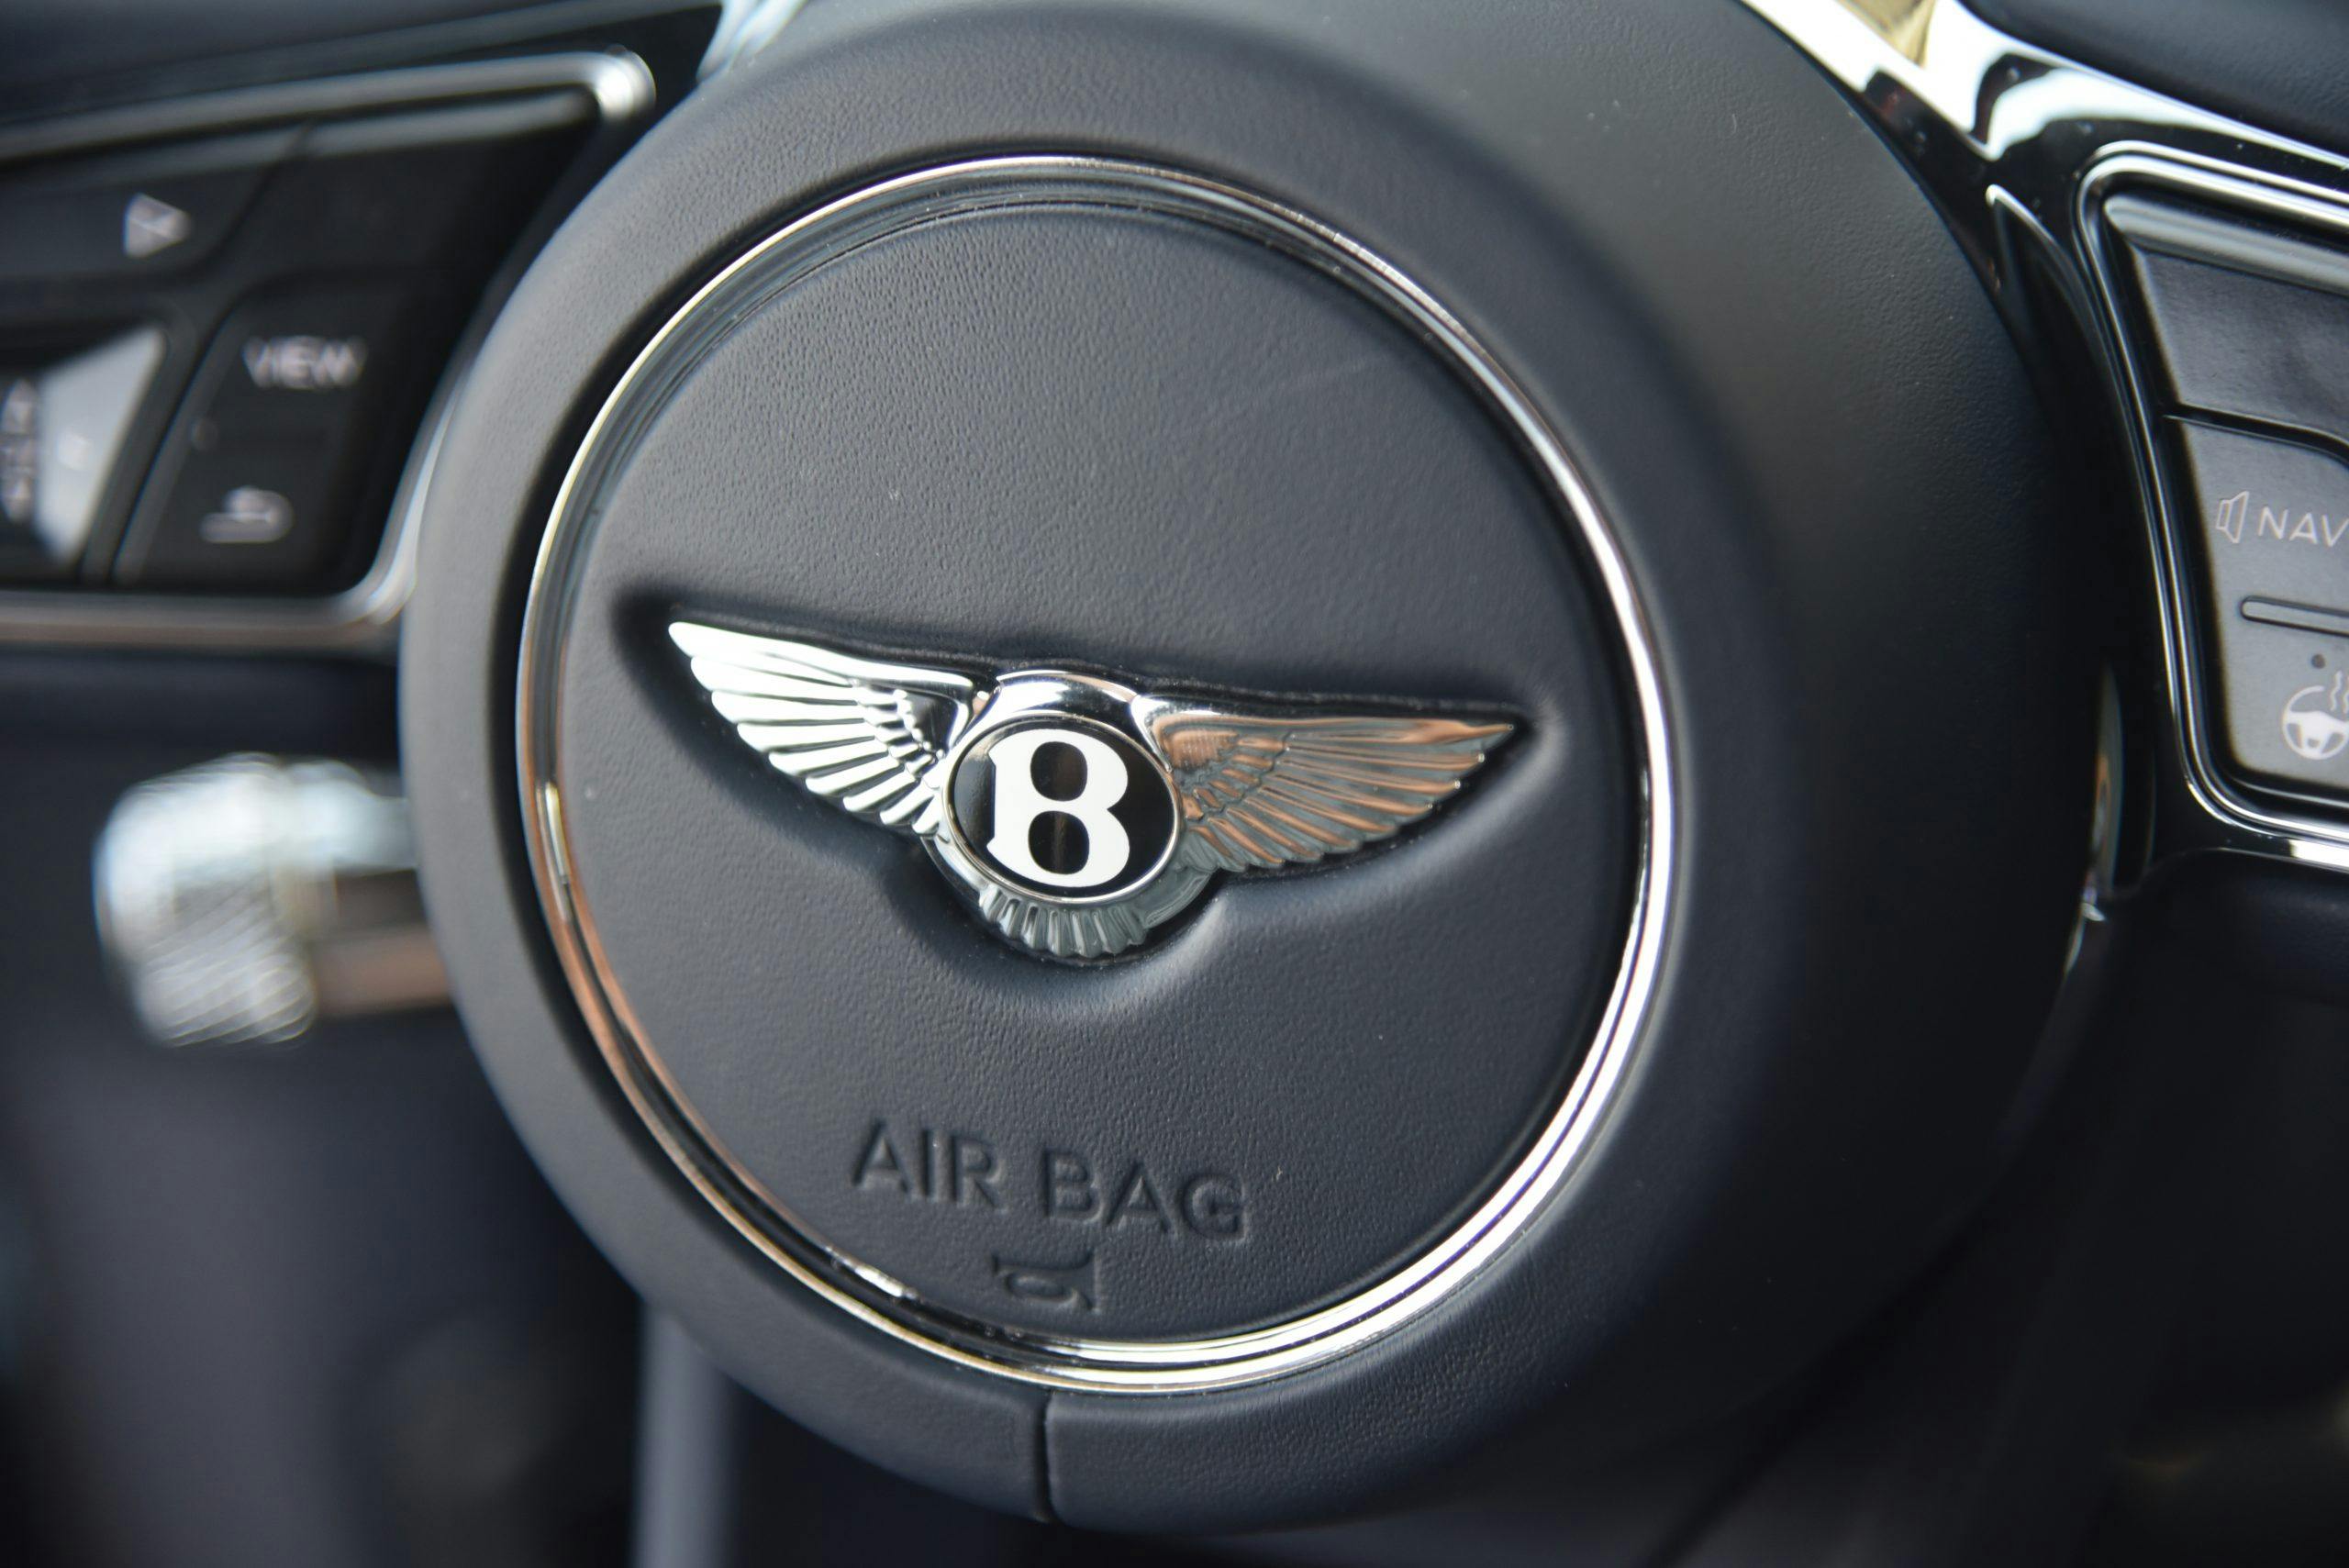 2022 Bentley Flying Spur Hybrid interior steering wheel logo closeup